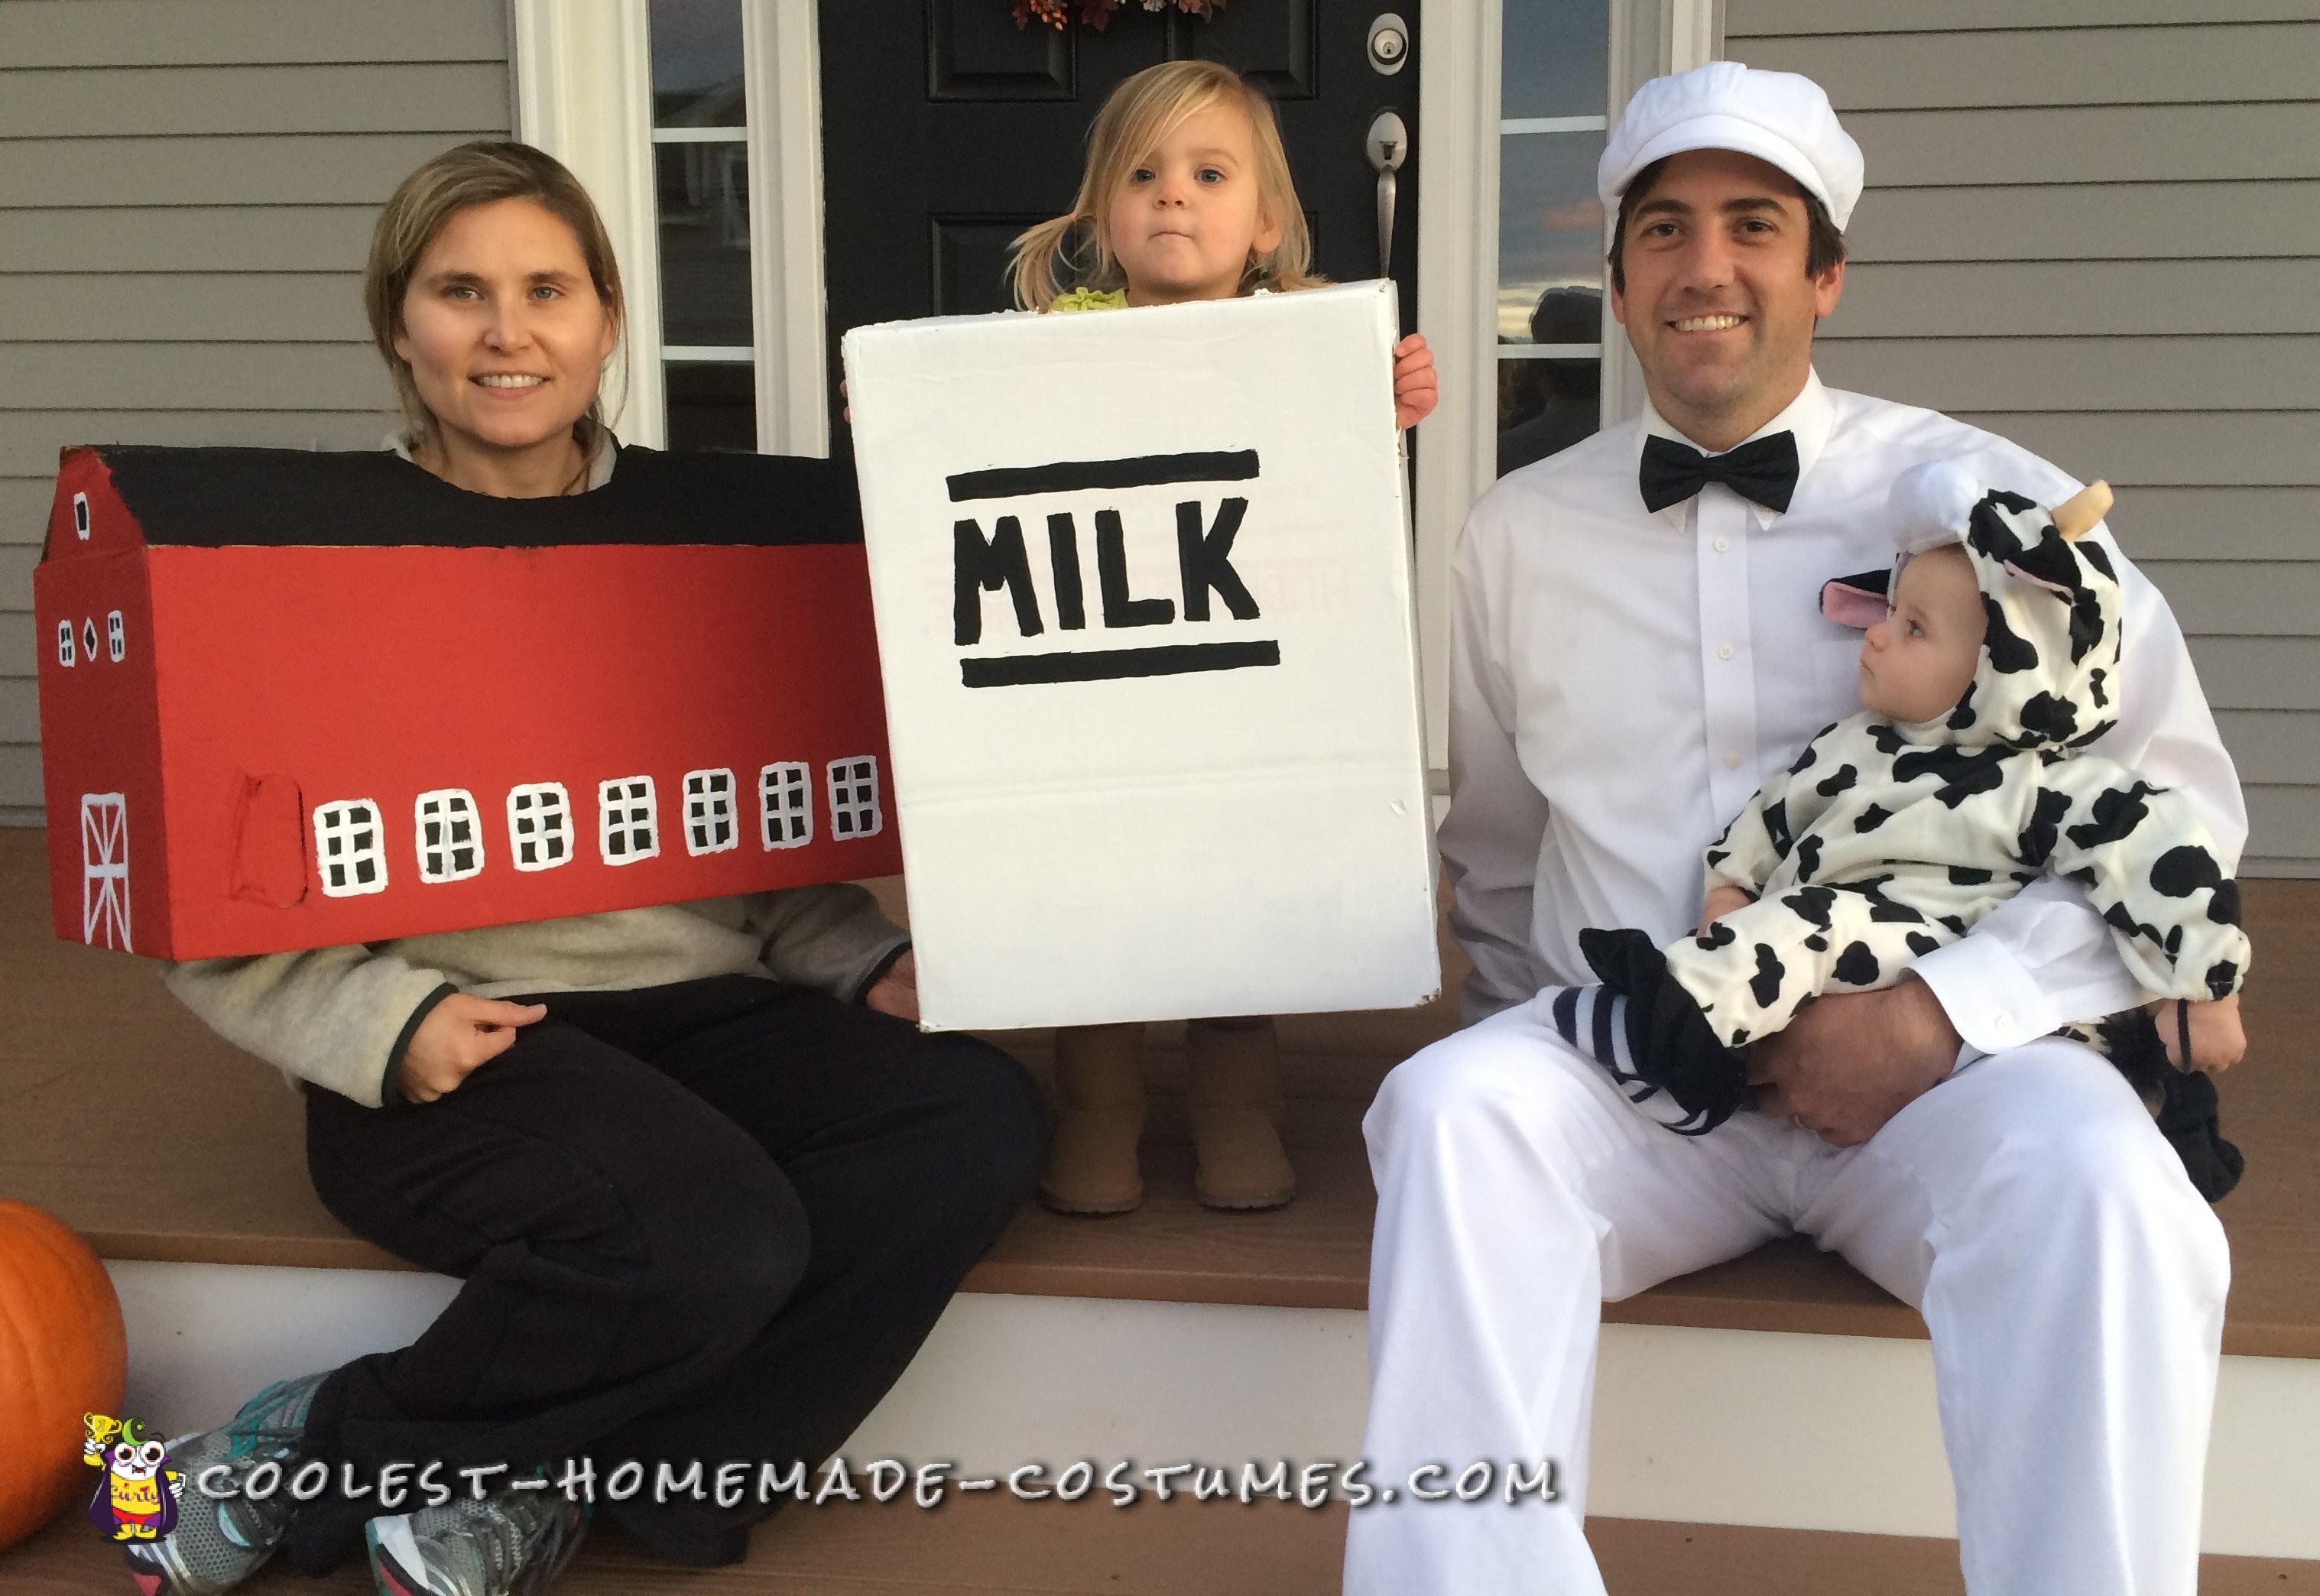 Coolest Homemade Milkman Costumes